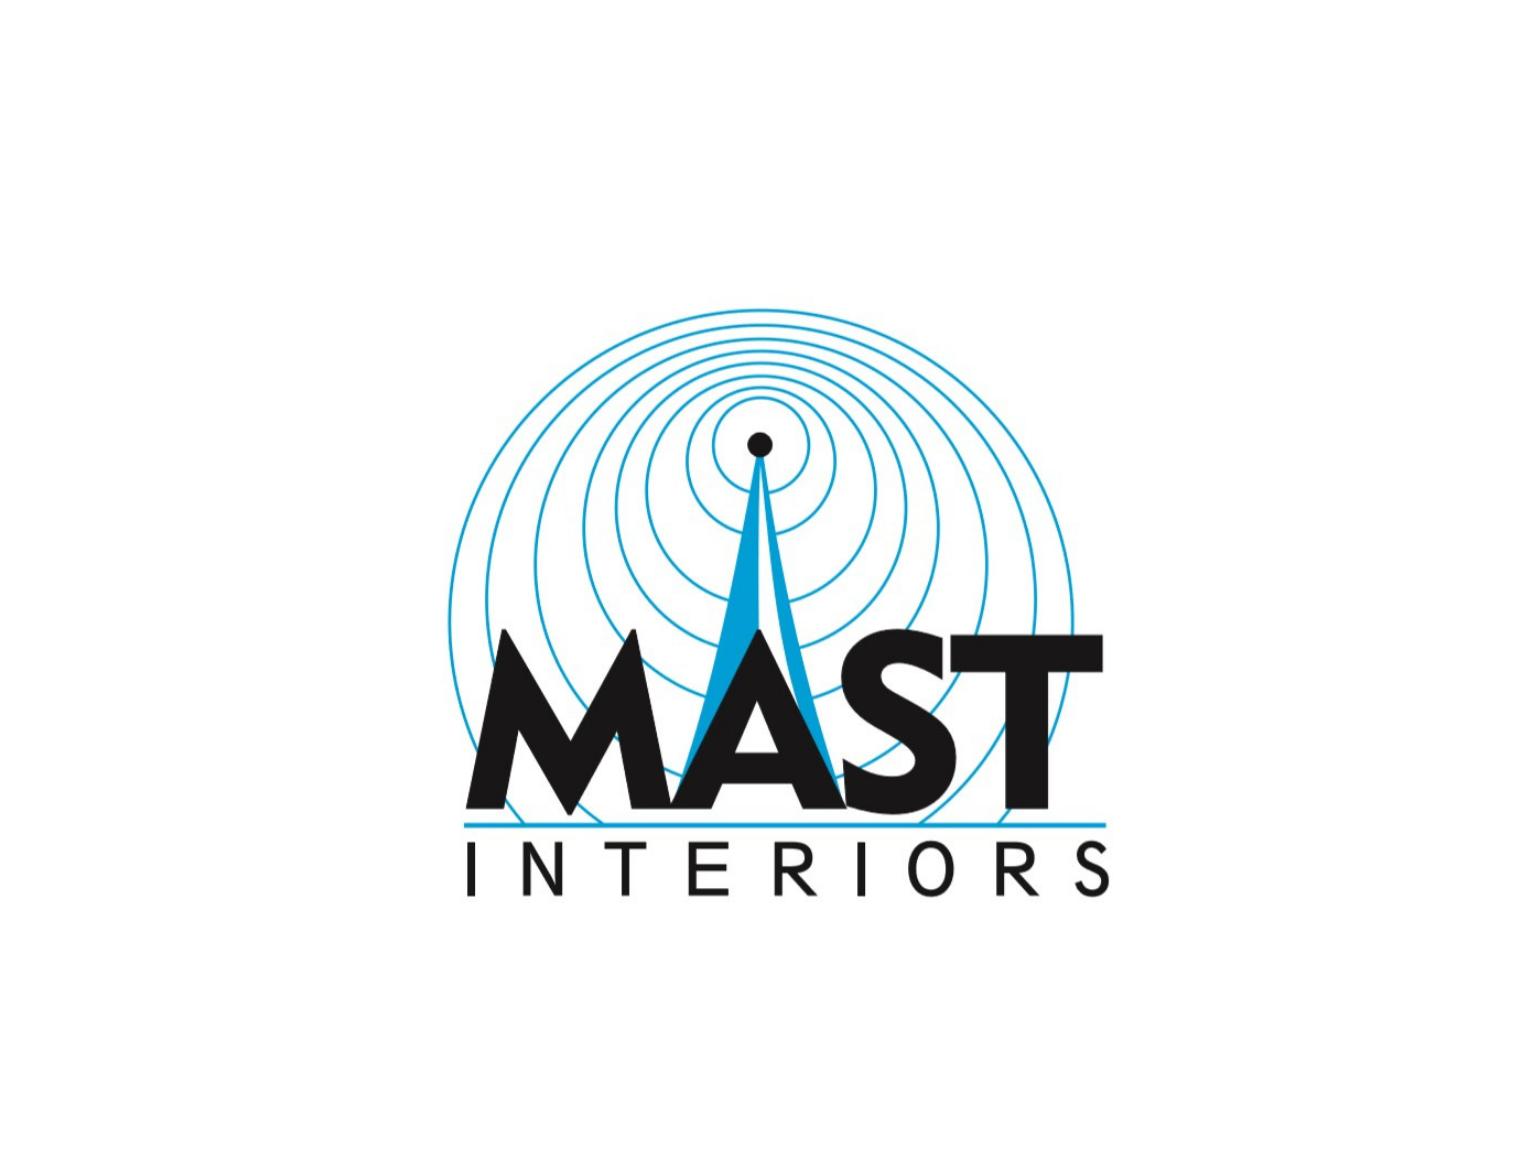 Mast Interiors, Caterham Valley, Surrey logo for website